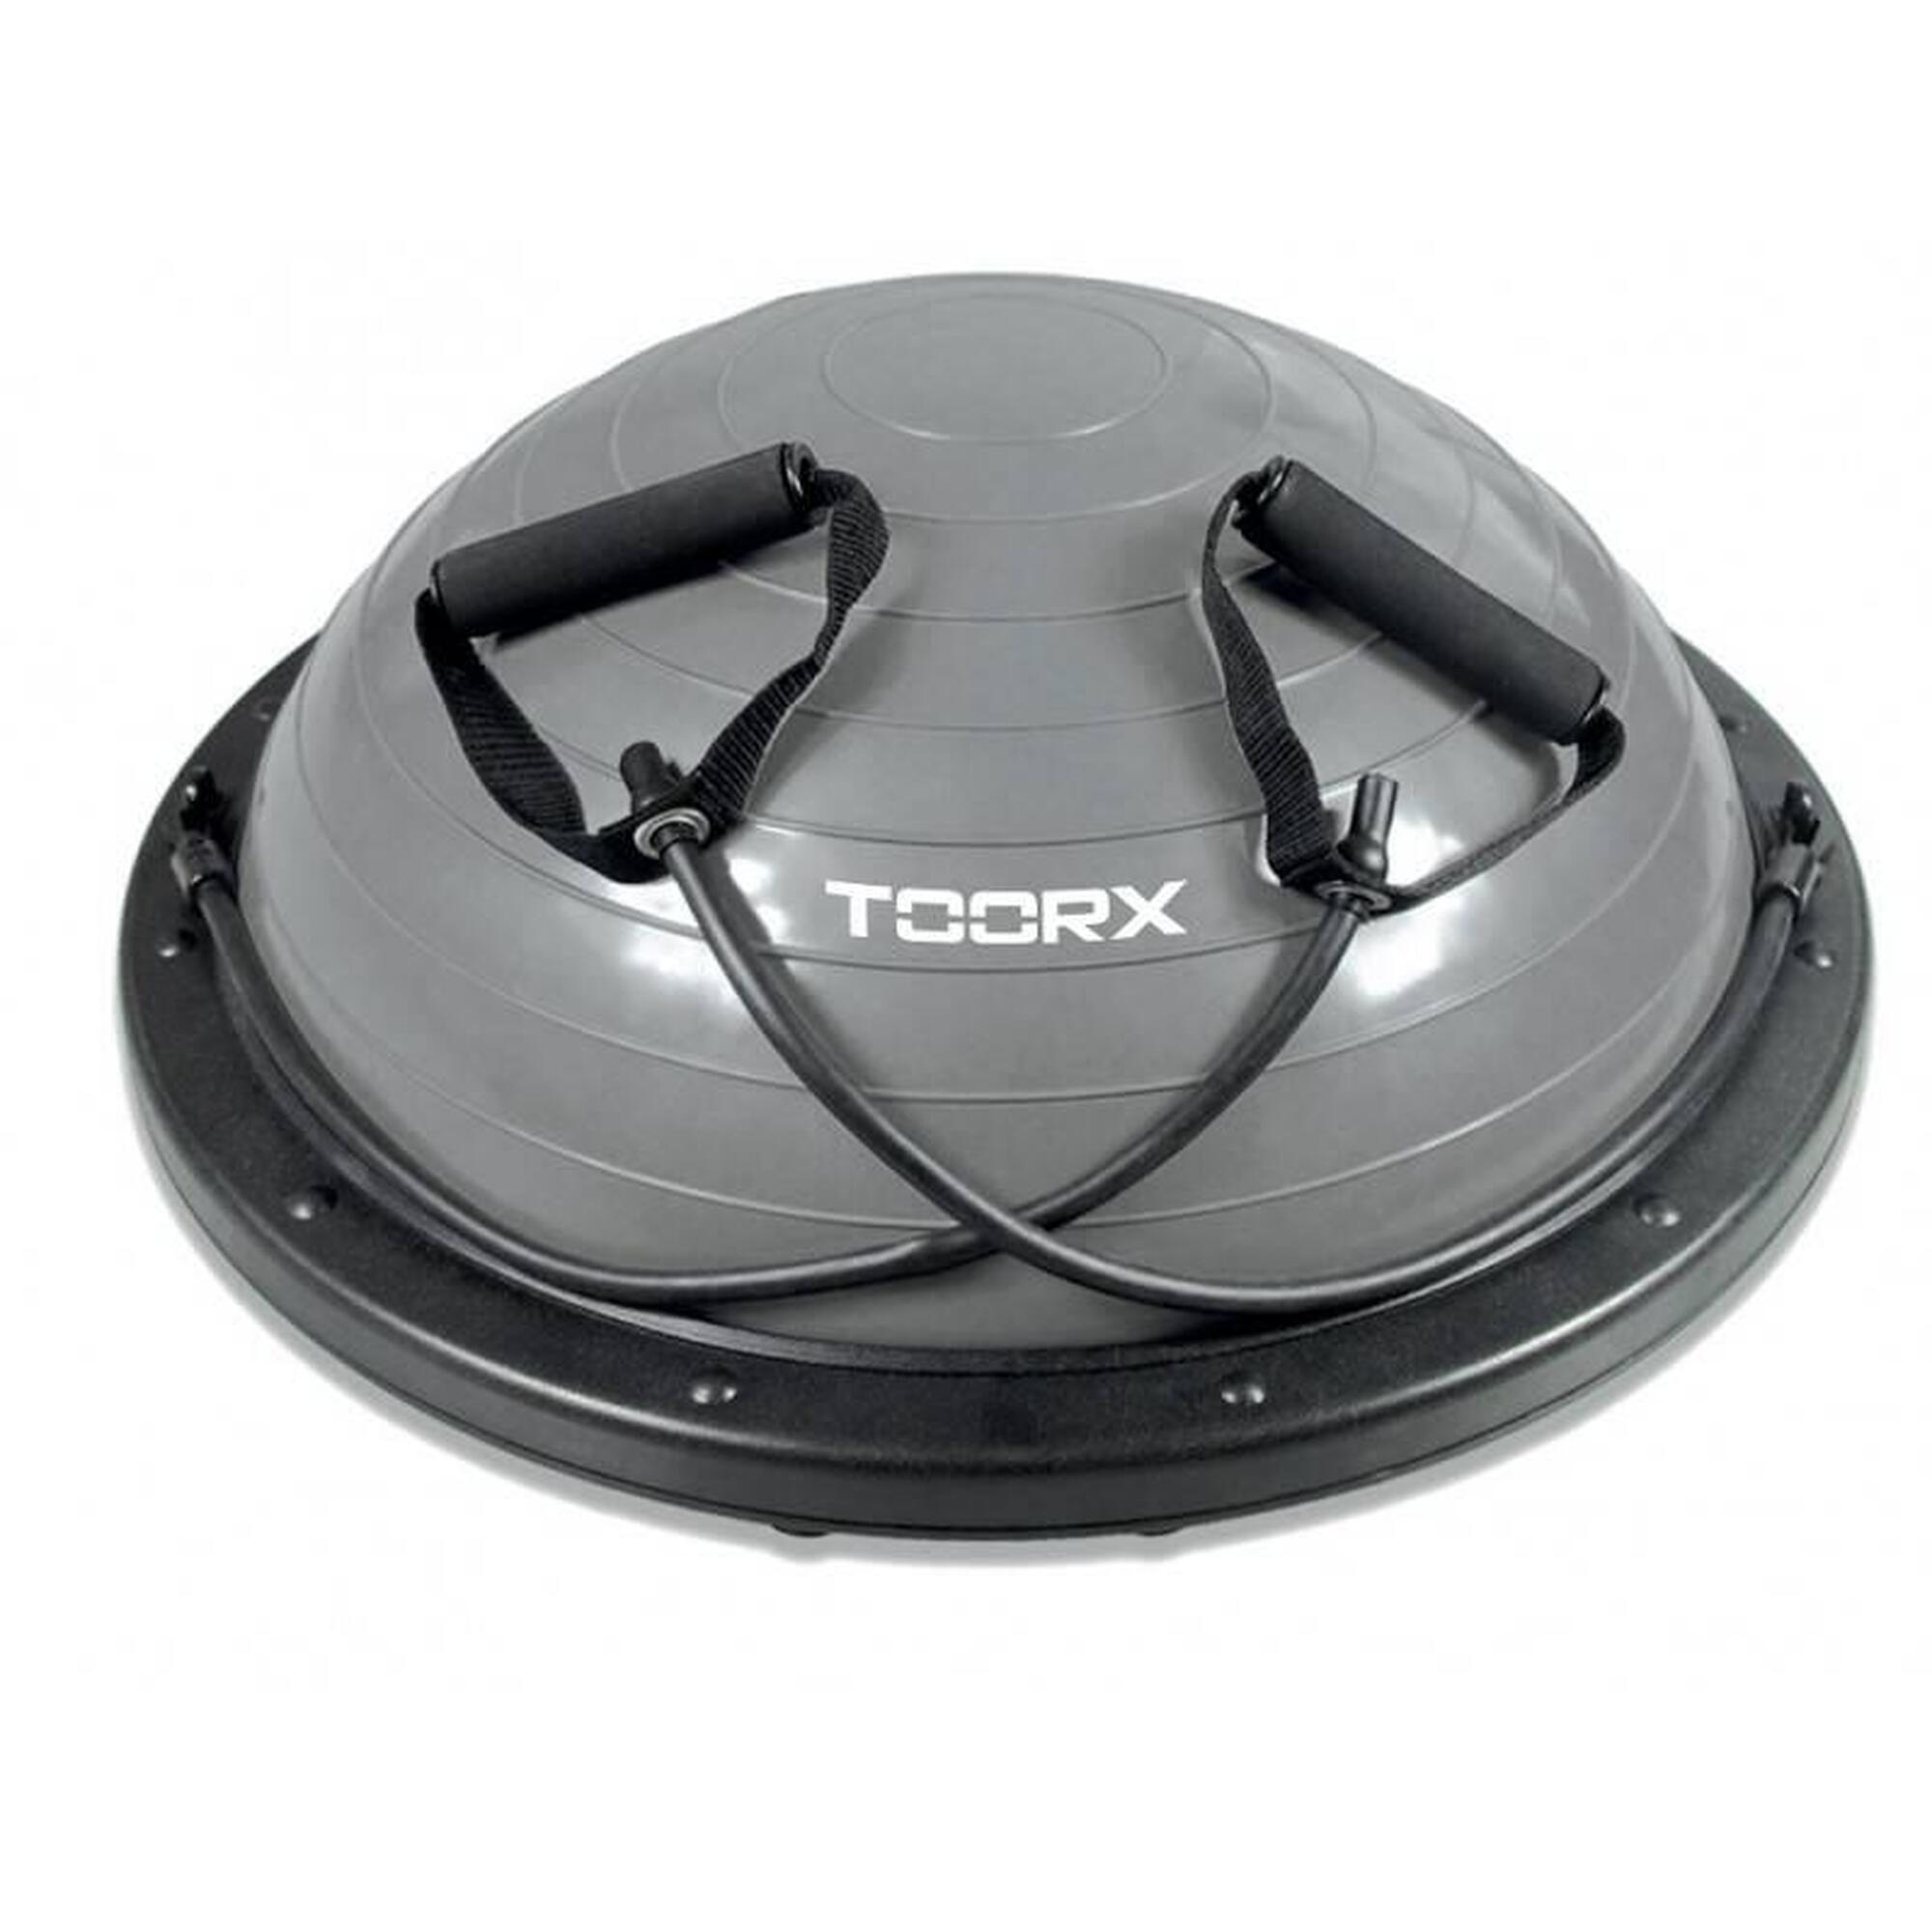 Toorx Balance trainer PRO - Ø 58 cm